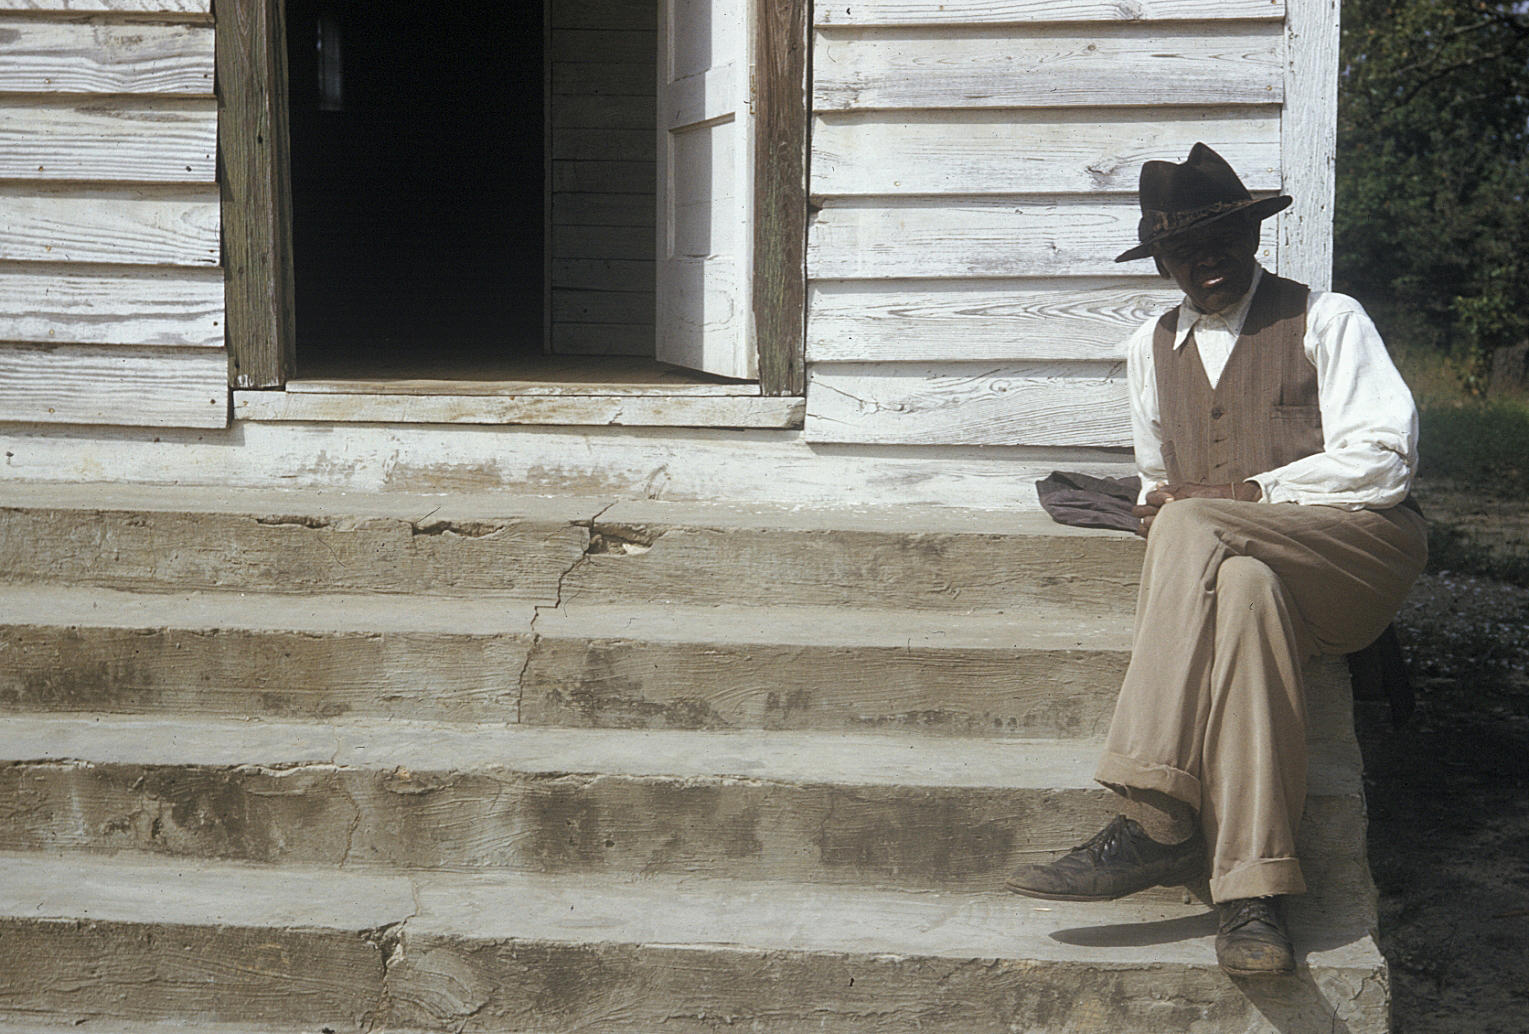 Tuskegee syphilis study descendants speak about tragedy, seek healing - CBS News1529 x 1034